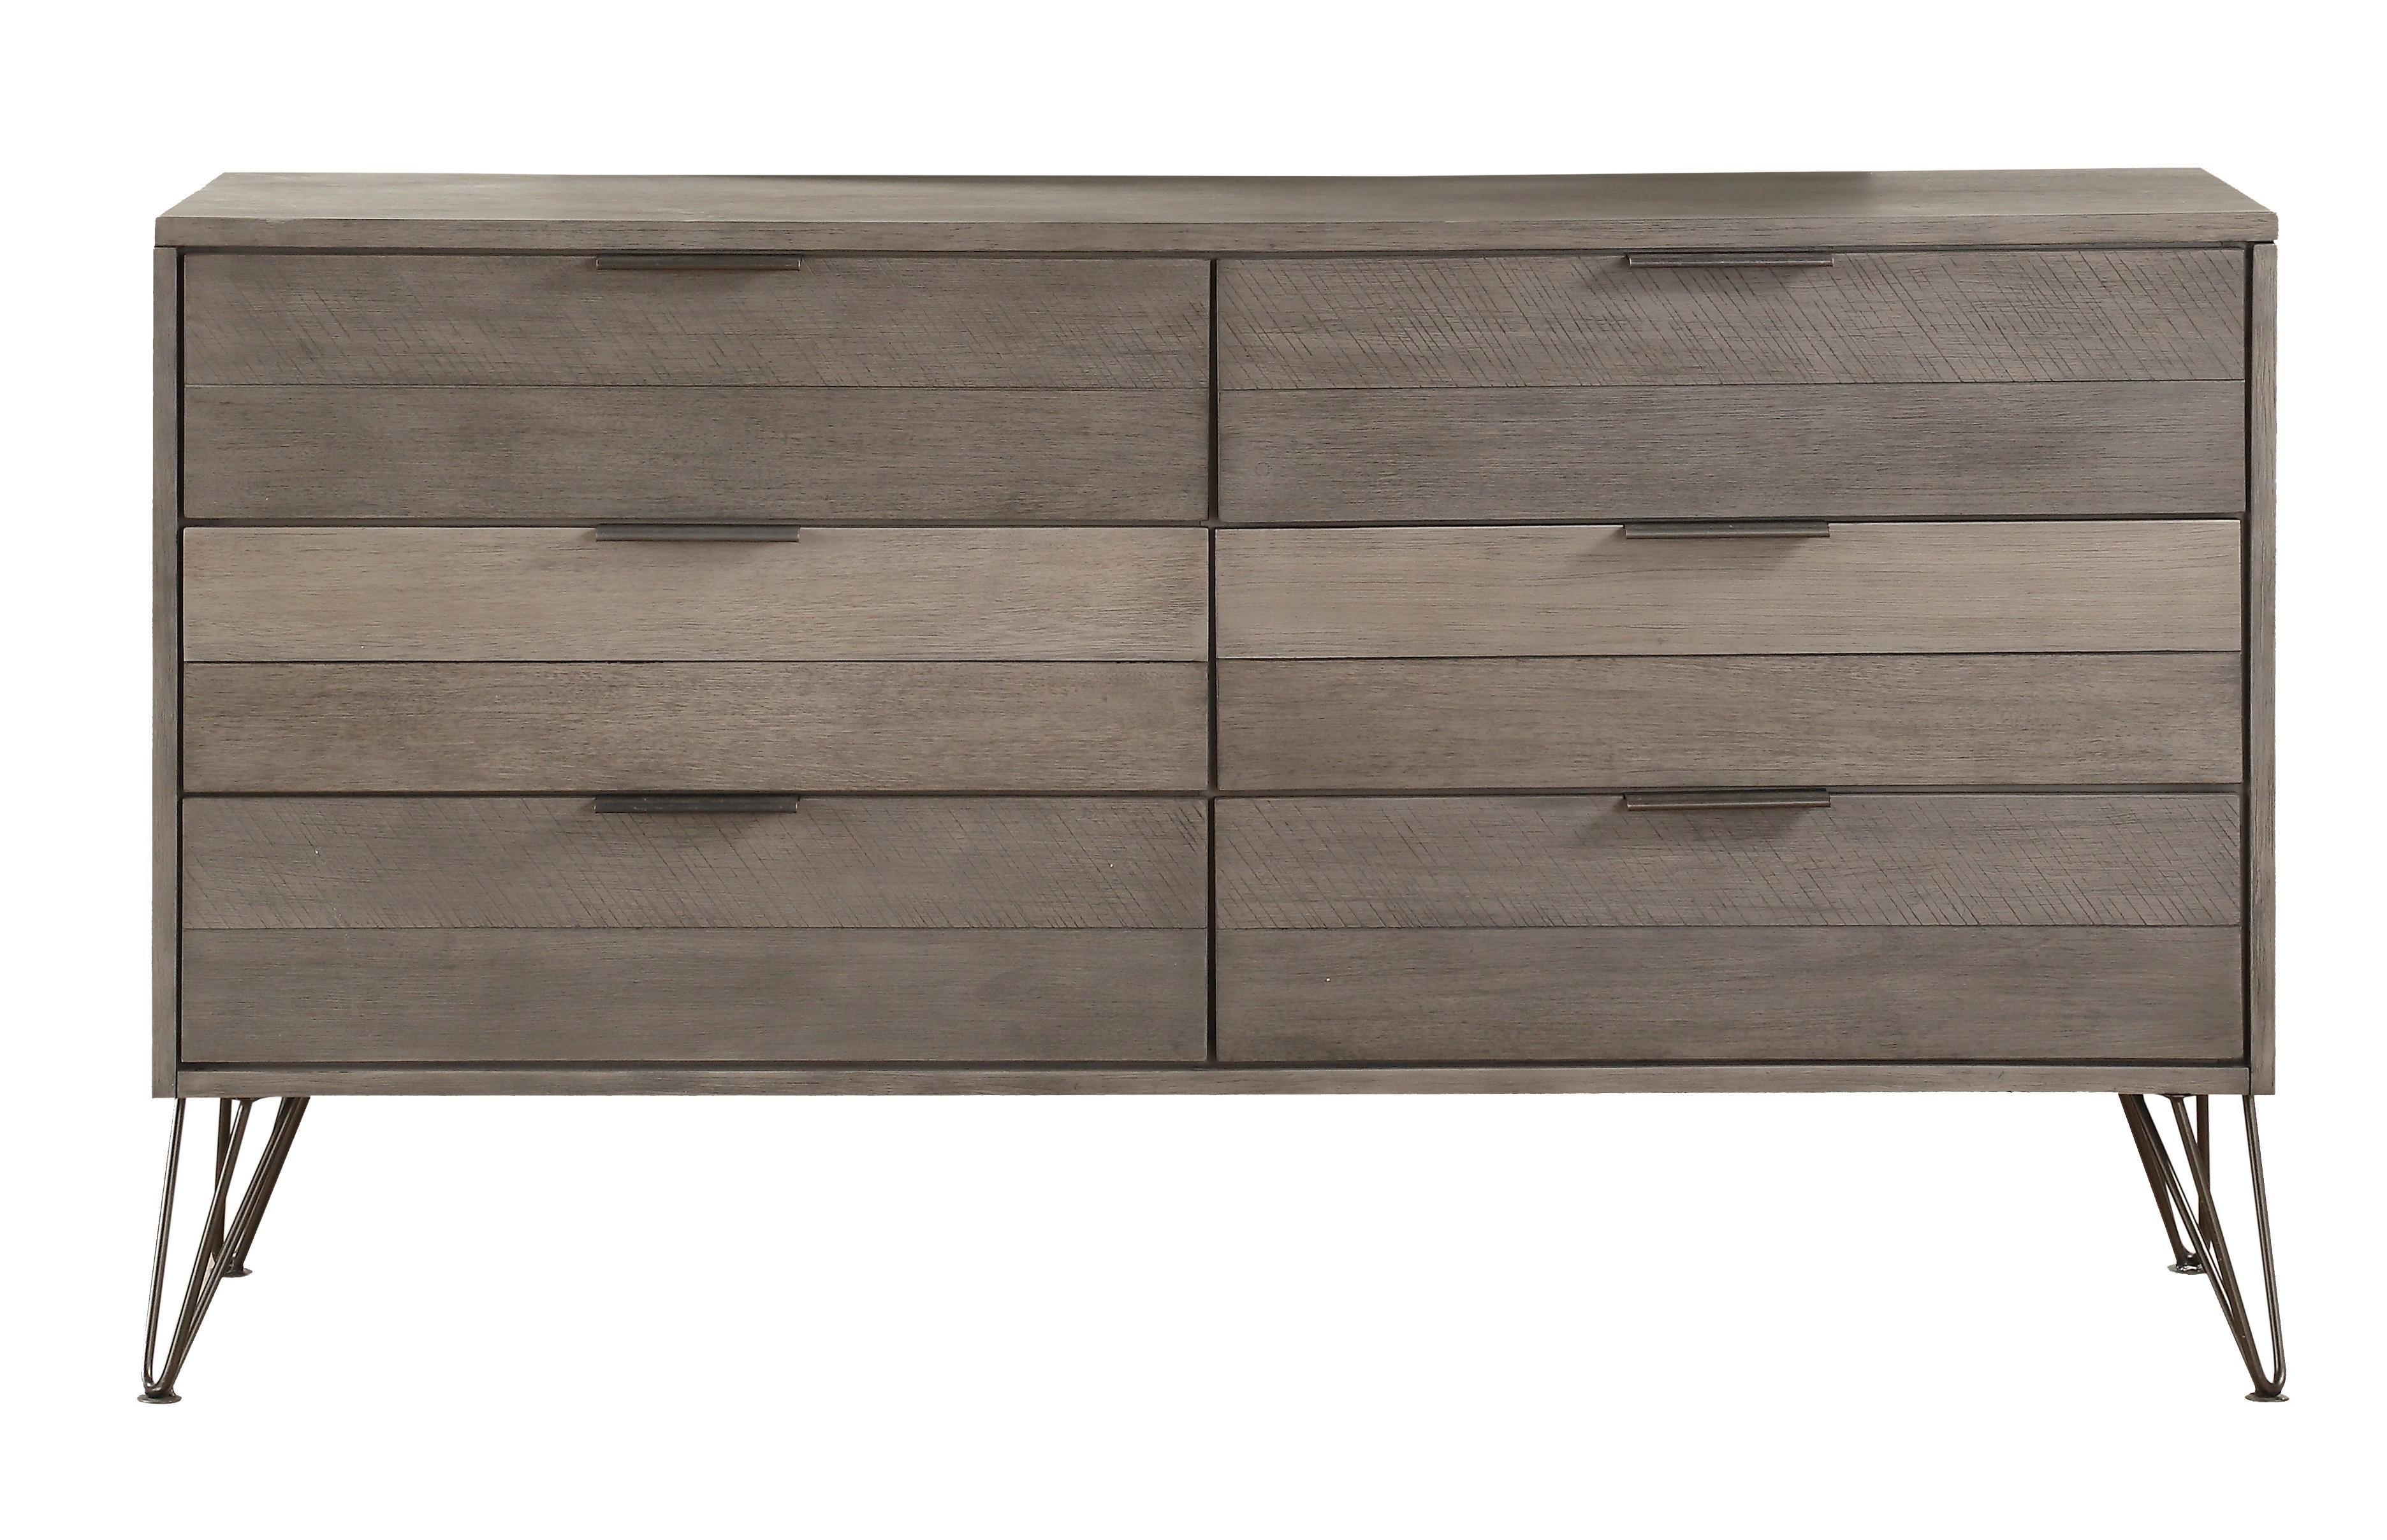 

    
Contemporary 3-Tone Gray Wood Dresser Homelegance 1604-5 Urbanite
